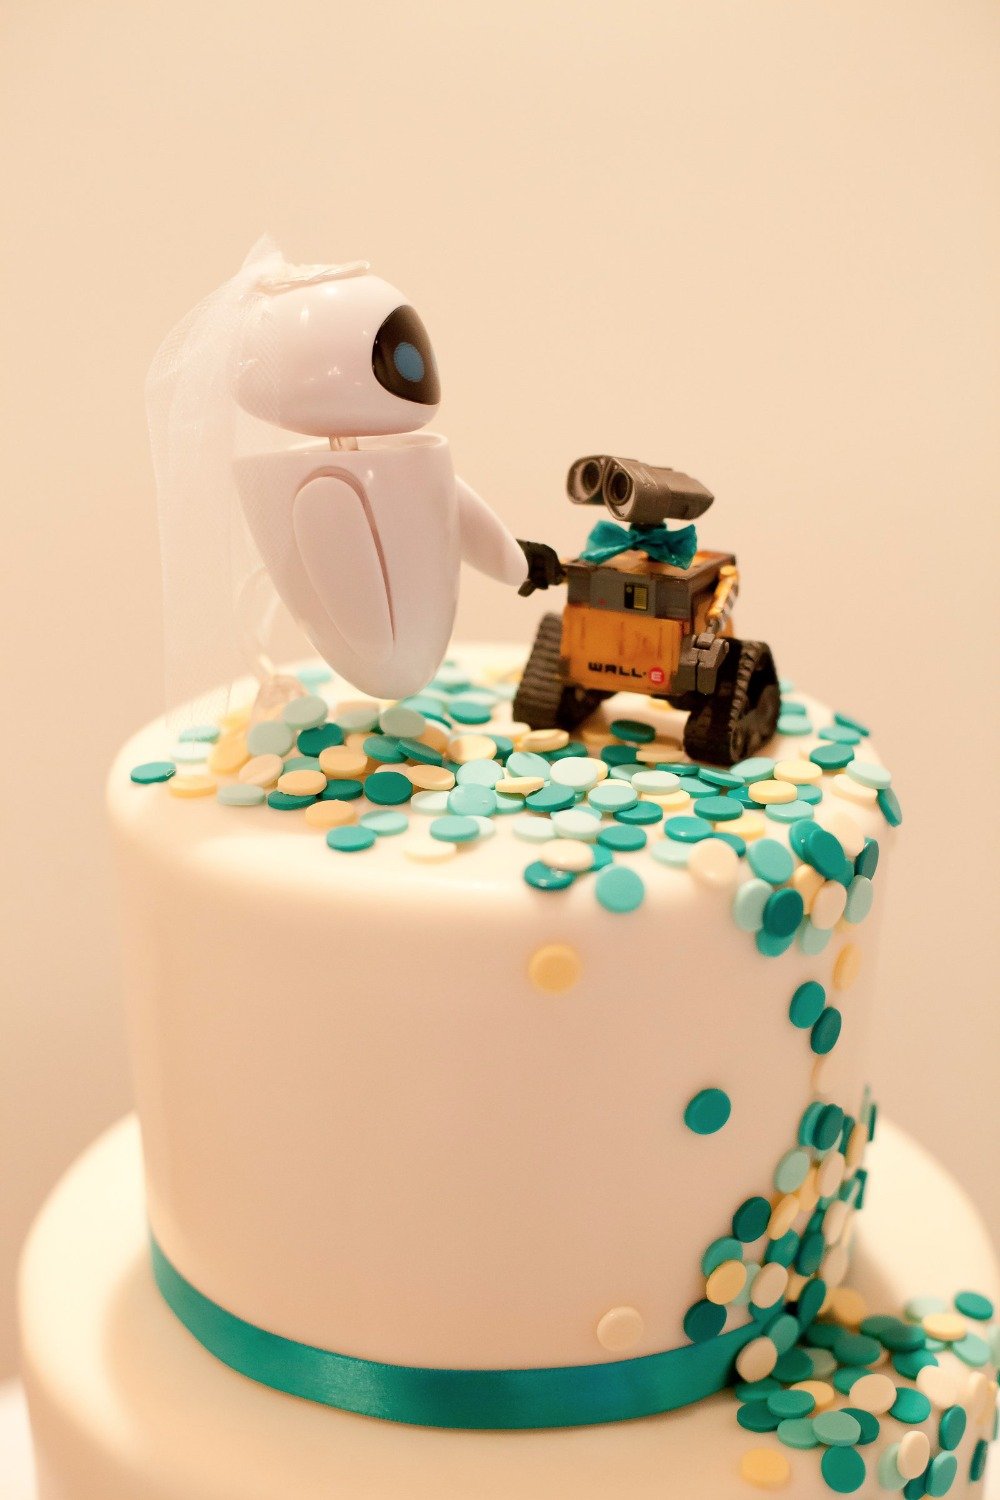 Eva and Wall-E wedding cake topper